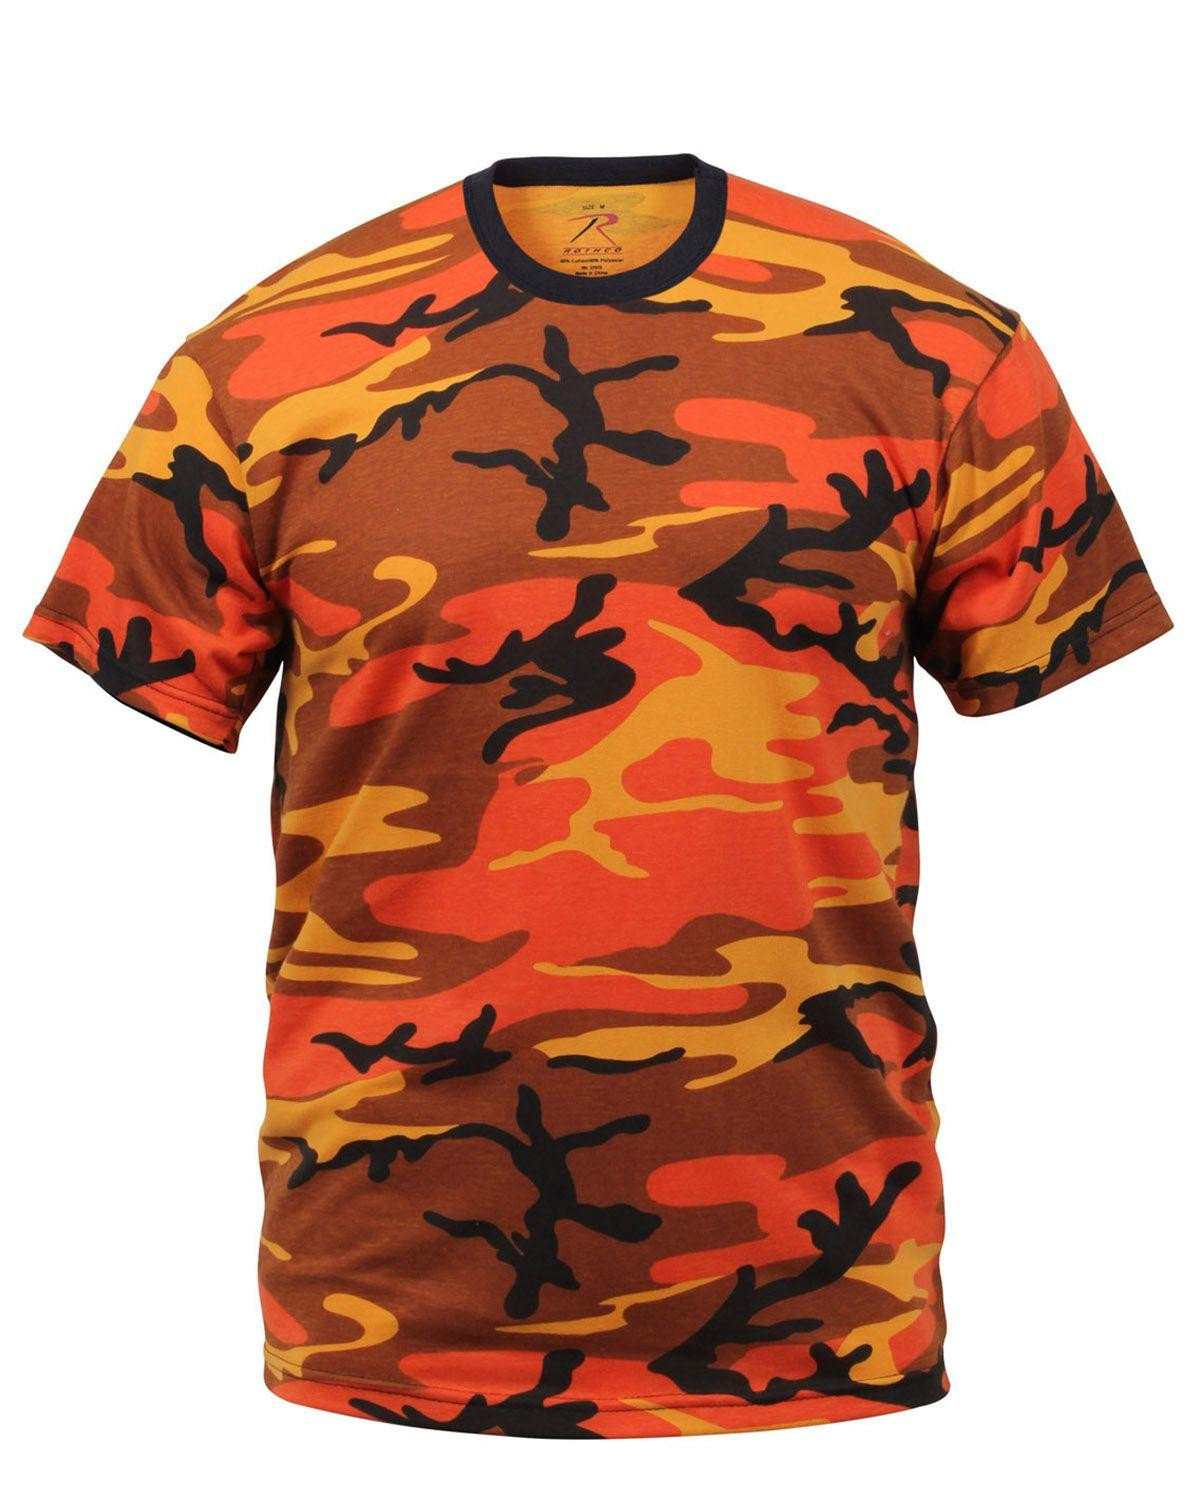 Rothco T-shirt - Mange Camouflager (Orange Camo, S)